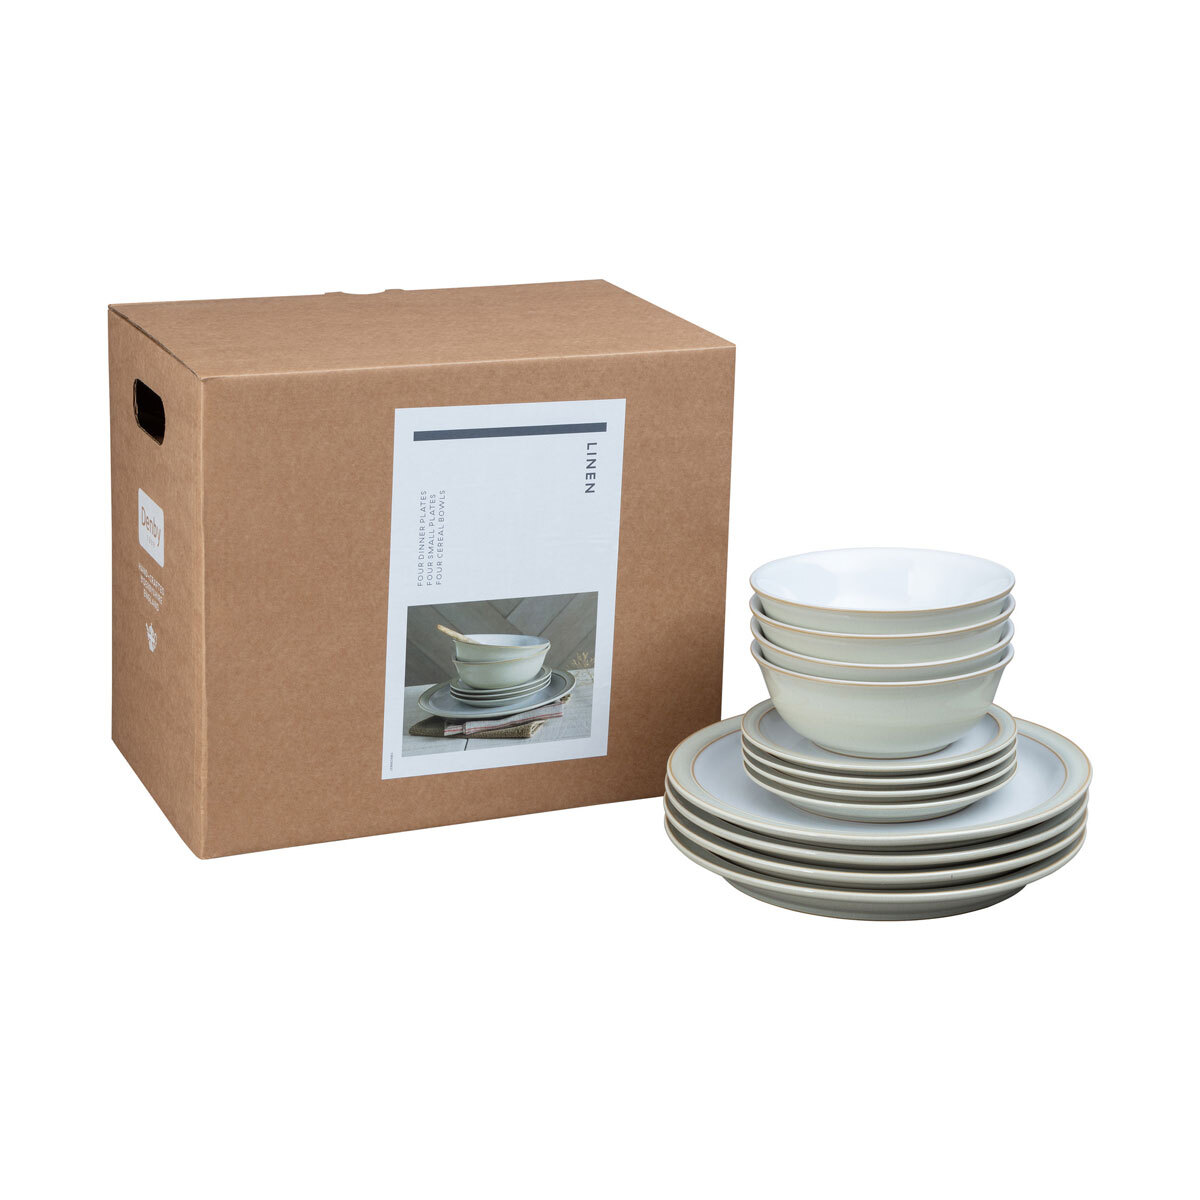 Denby Stoneware 12 Piece Dinnerware Set, Linen